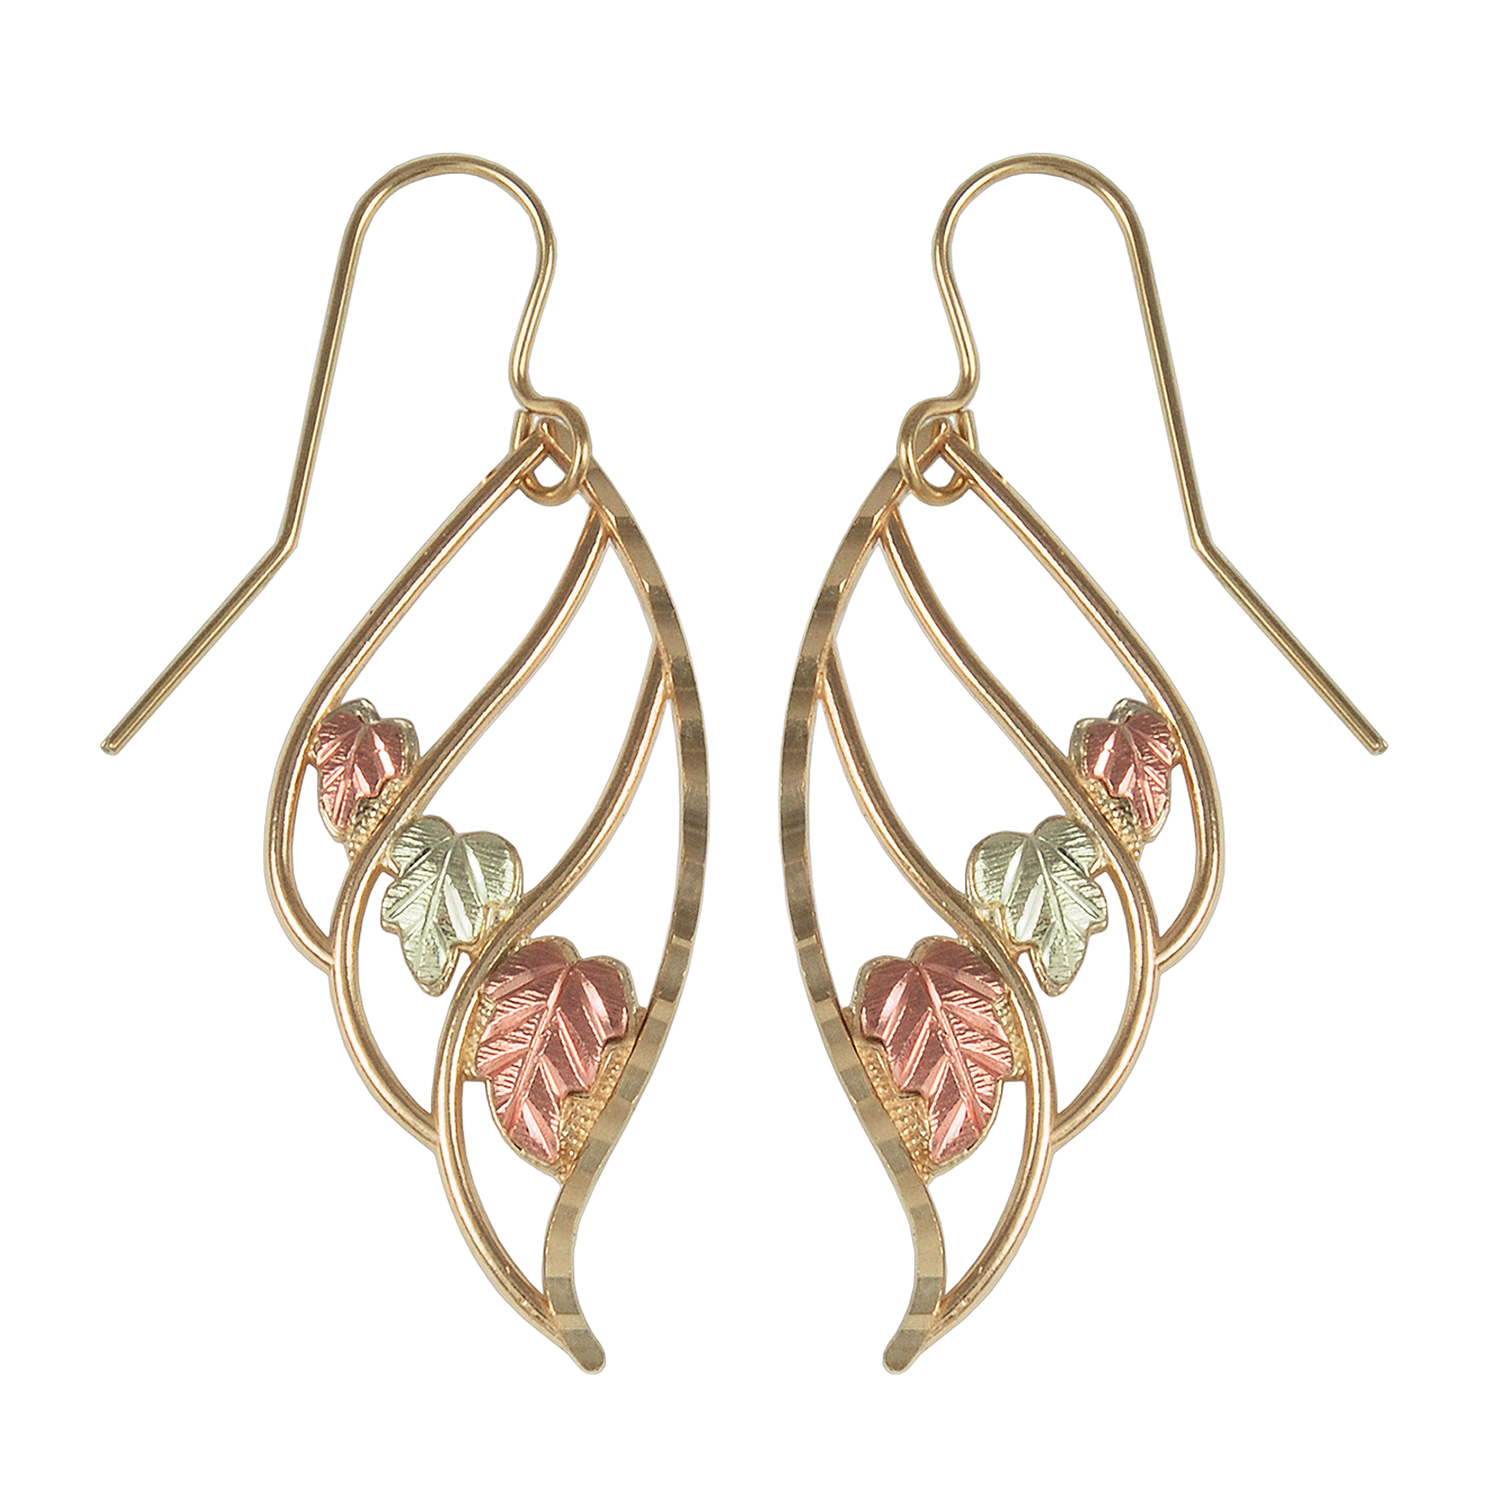 10K Black Hills Gold Earrings with 12K Leaves